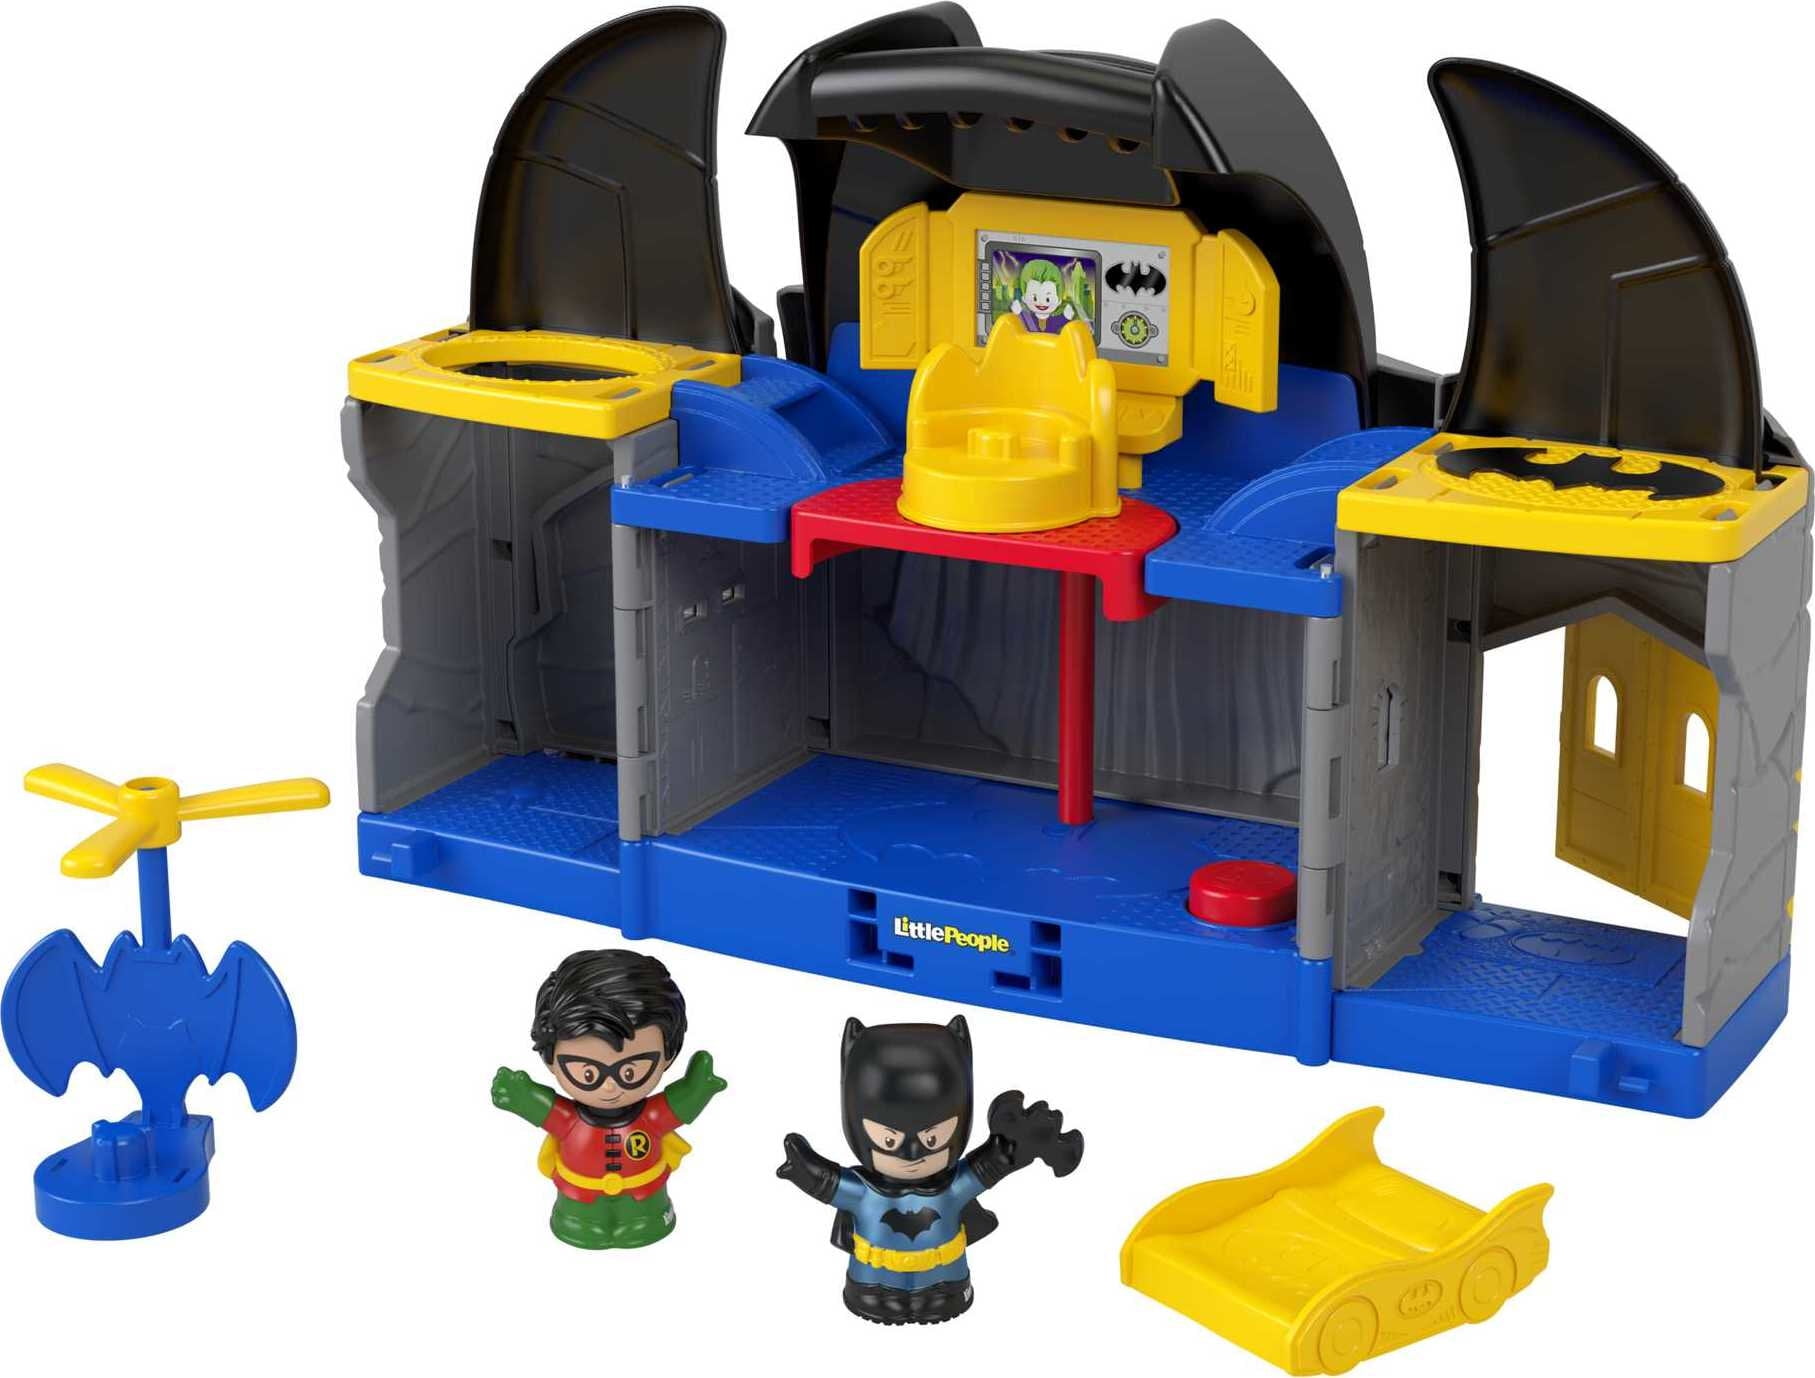 Little People DC Super Friends Batcave Batman Playset $11.12 + Free S&H w/ Walmart+ or $35+